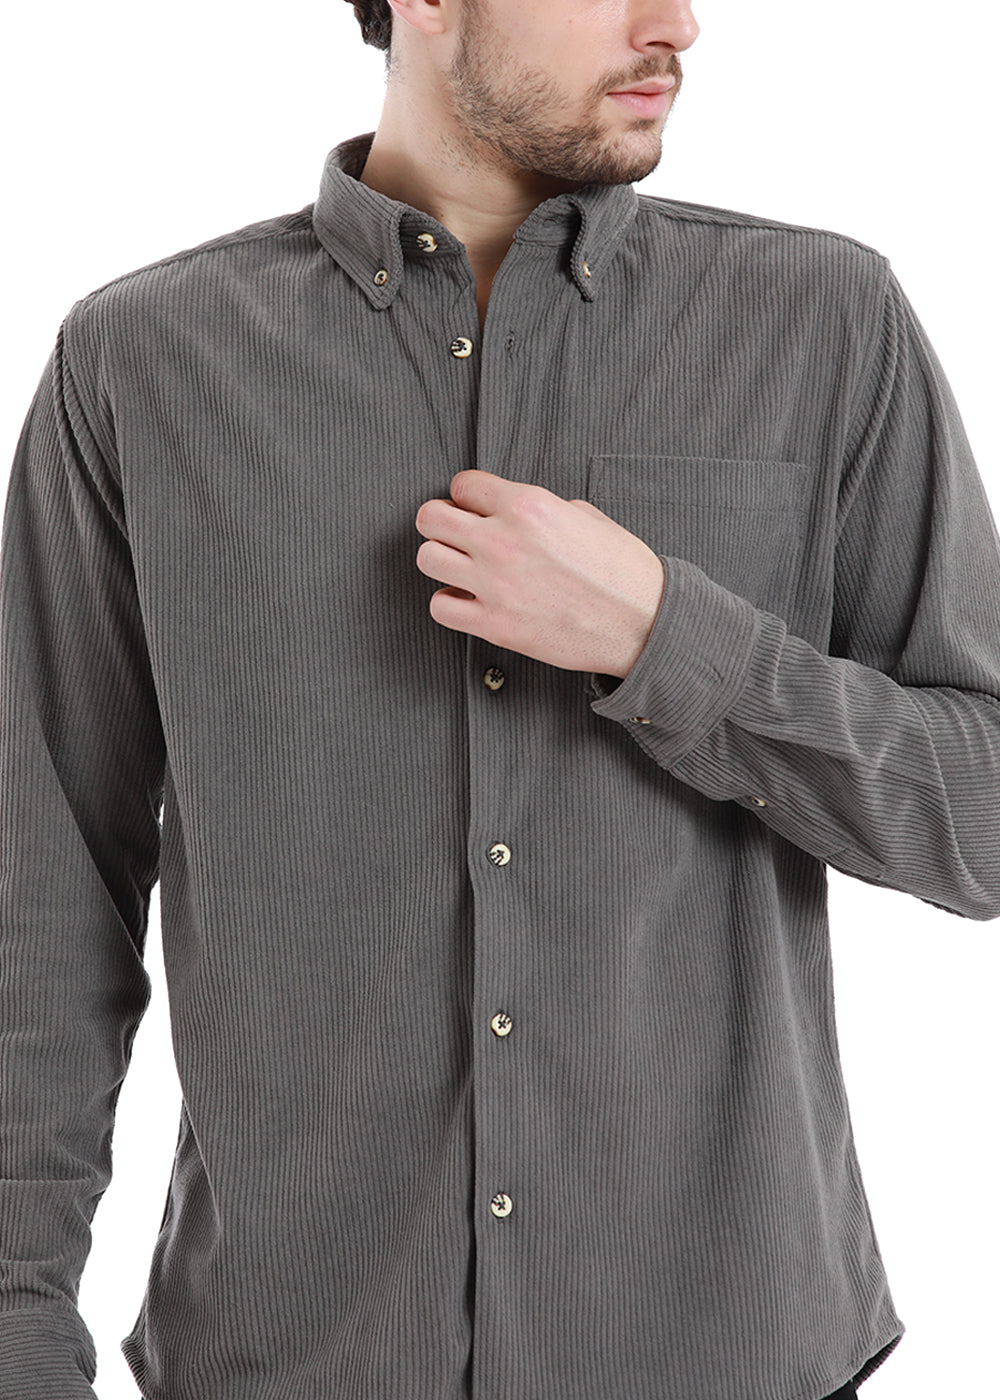 Steel Gray Corduroy shirt